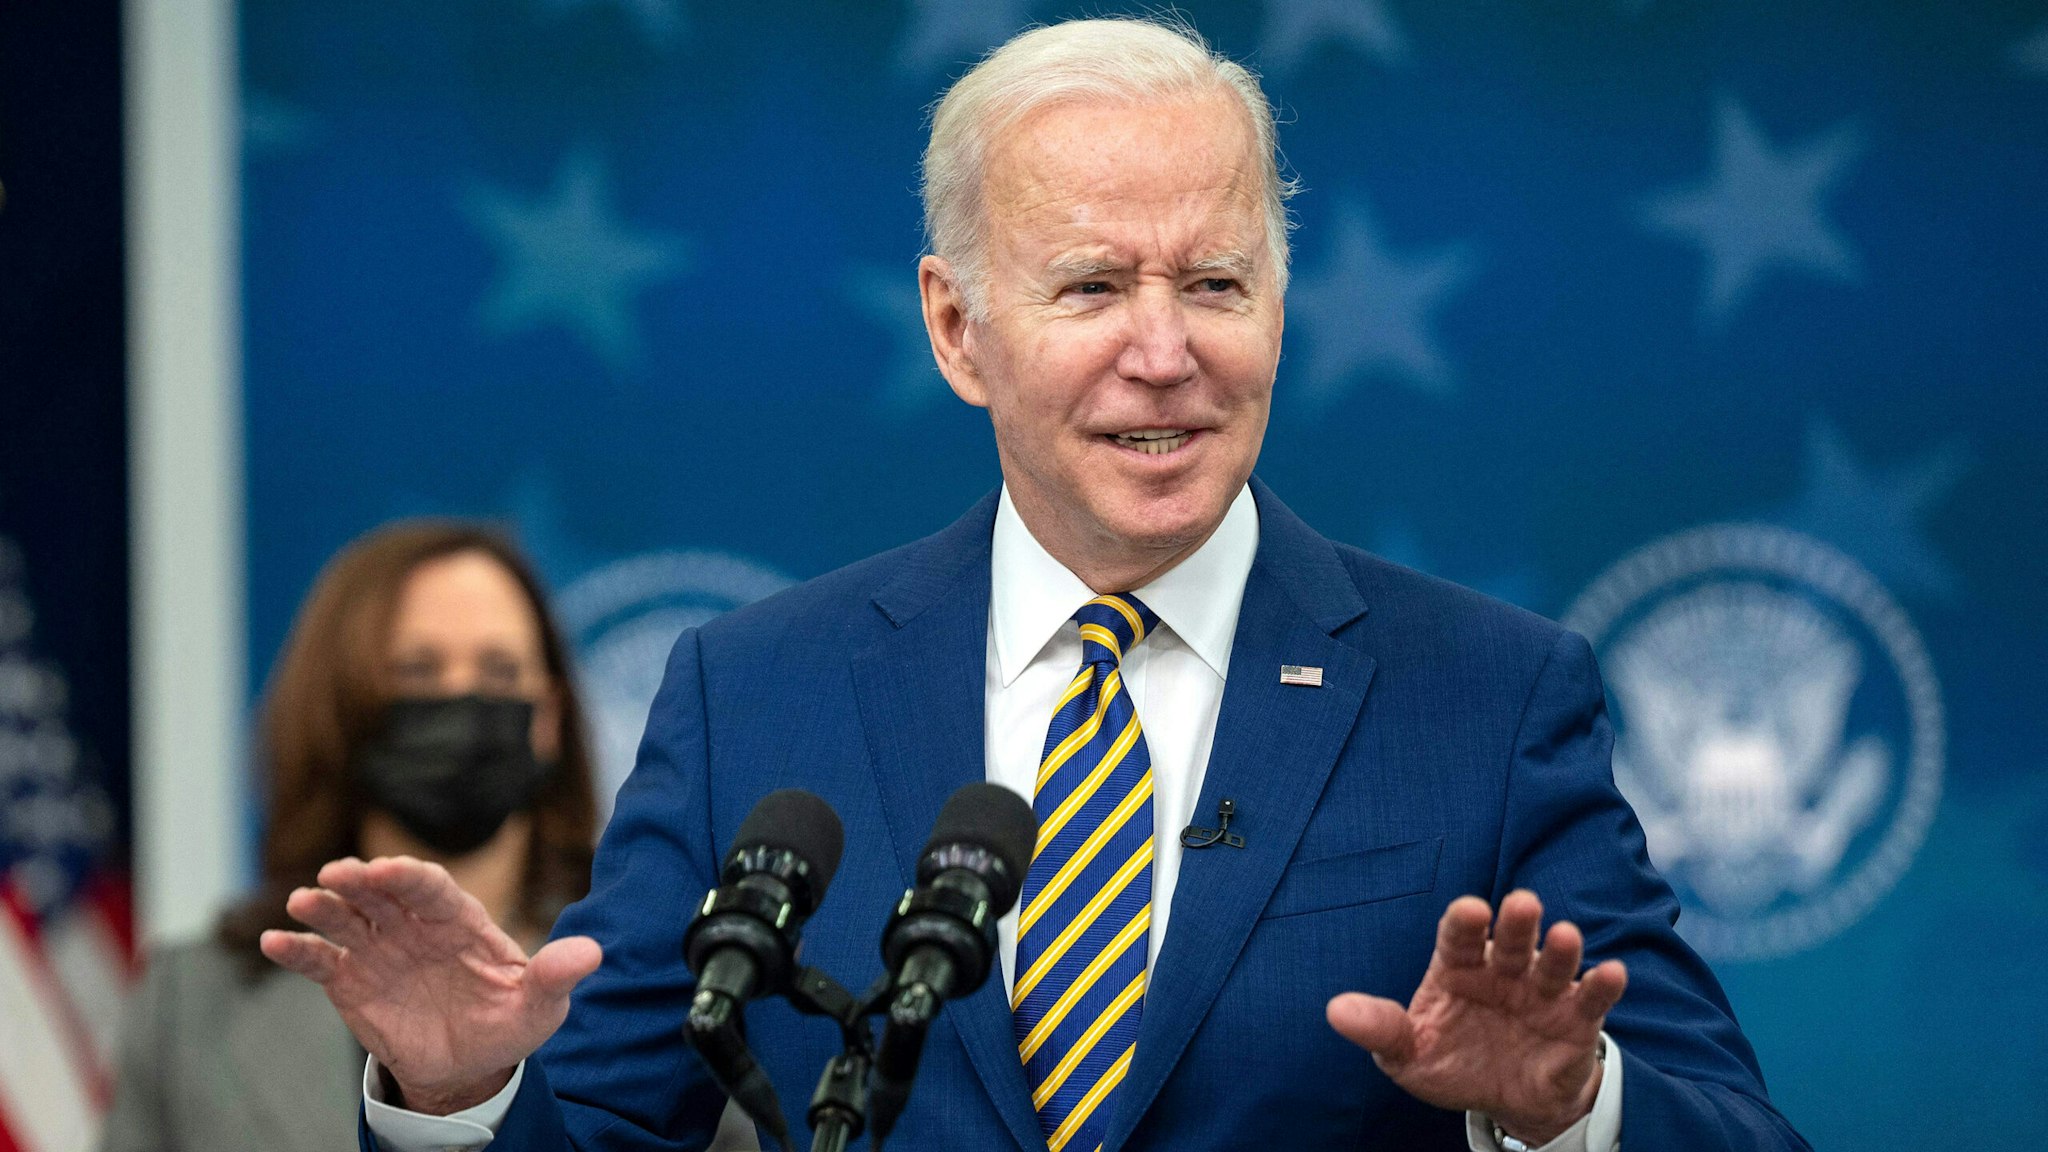 US President Joe Biden speaks before signing bills at the White House in Washington, DC, on November 30, 2021.